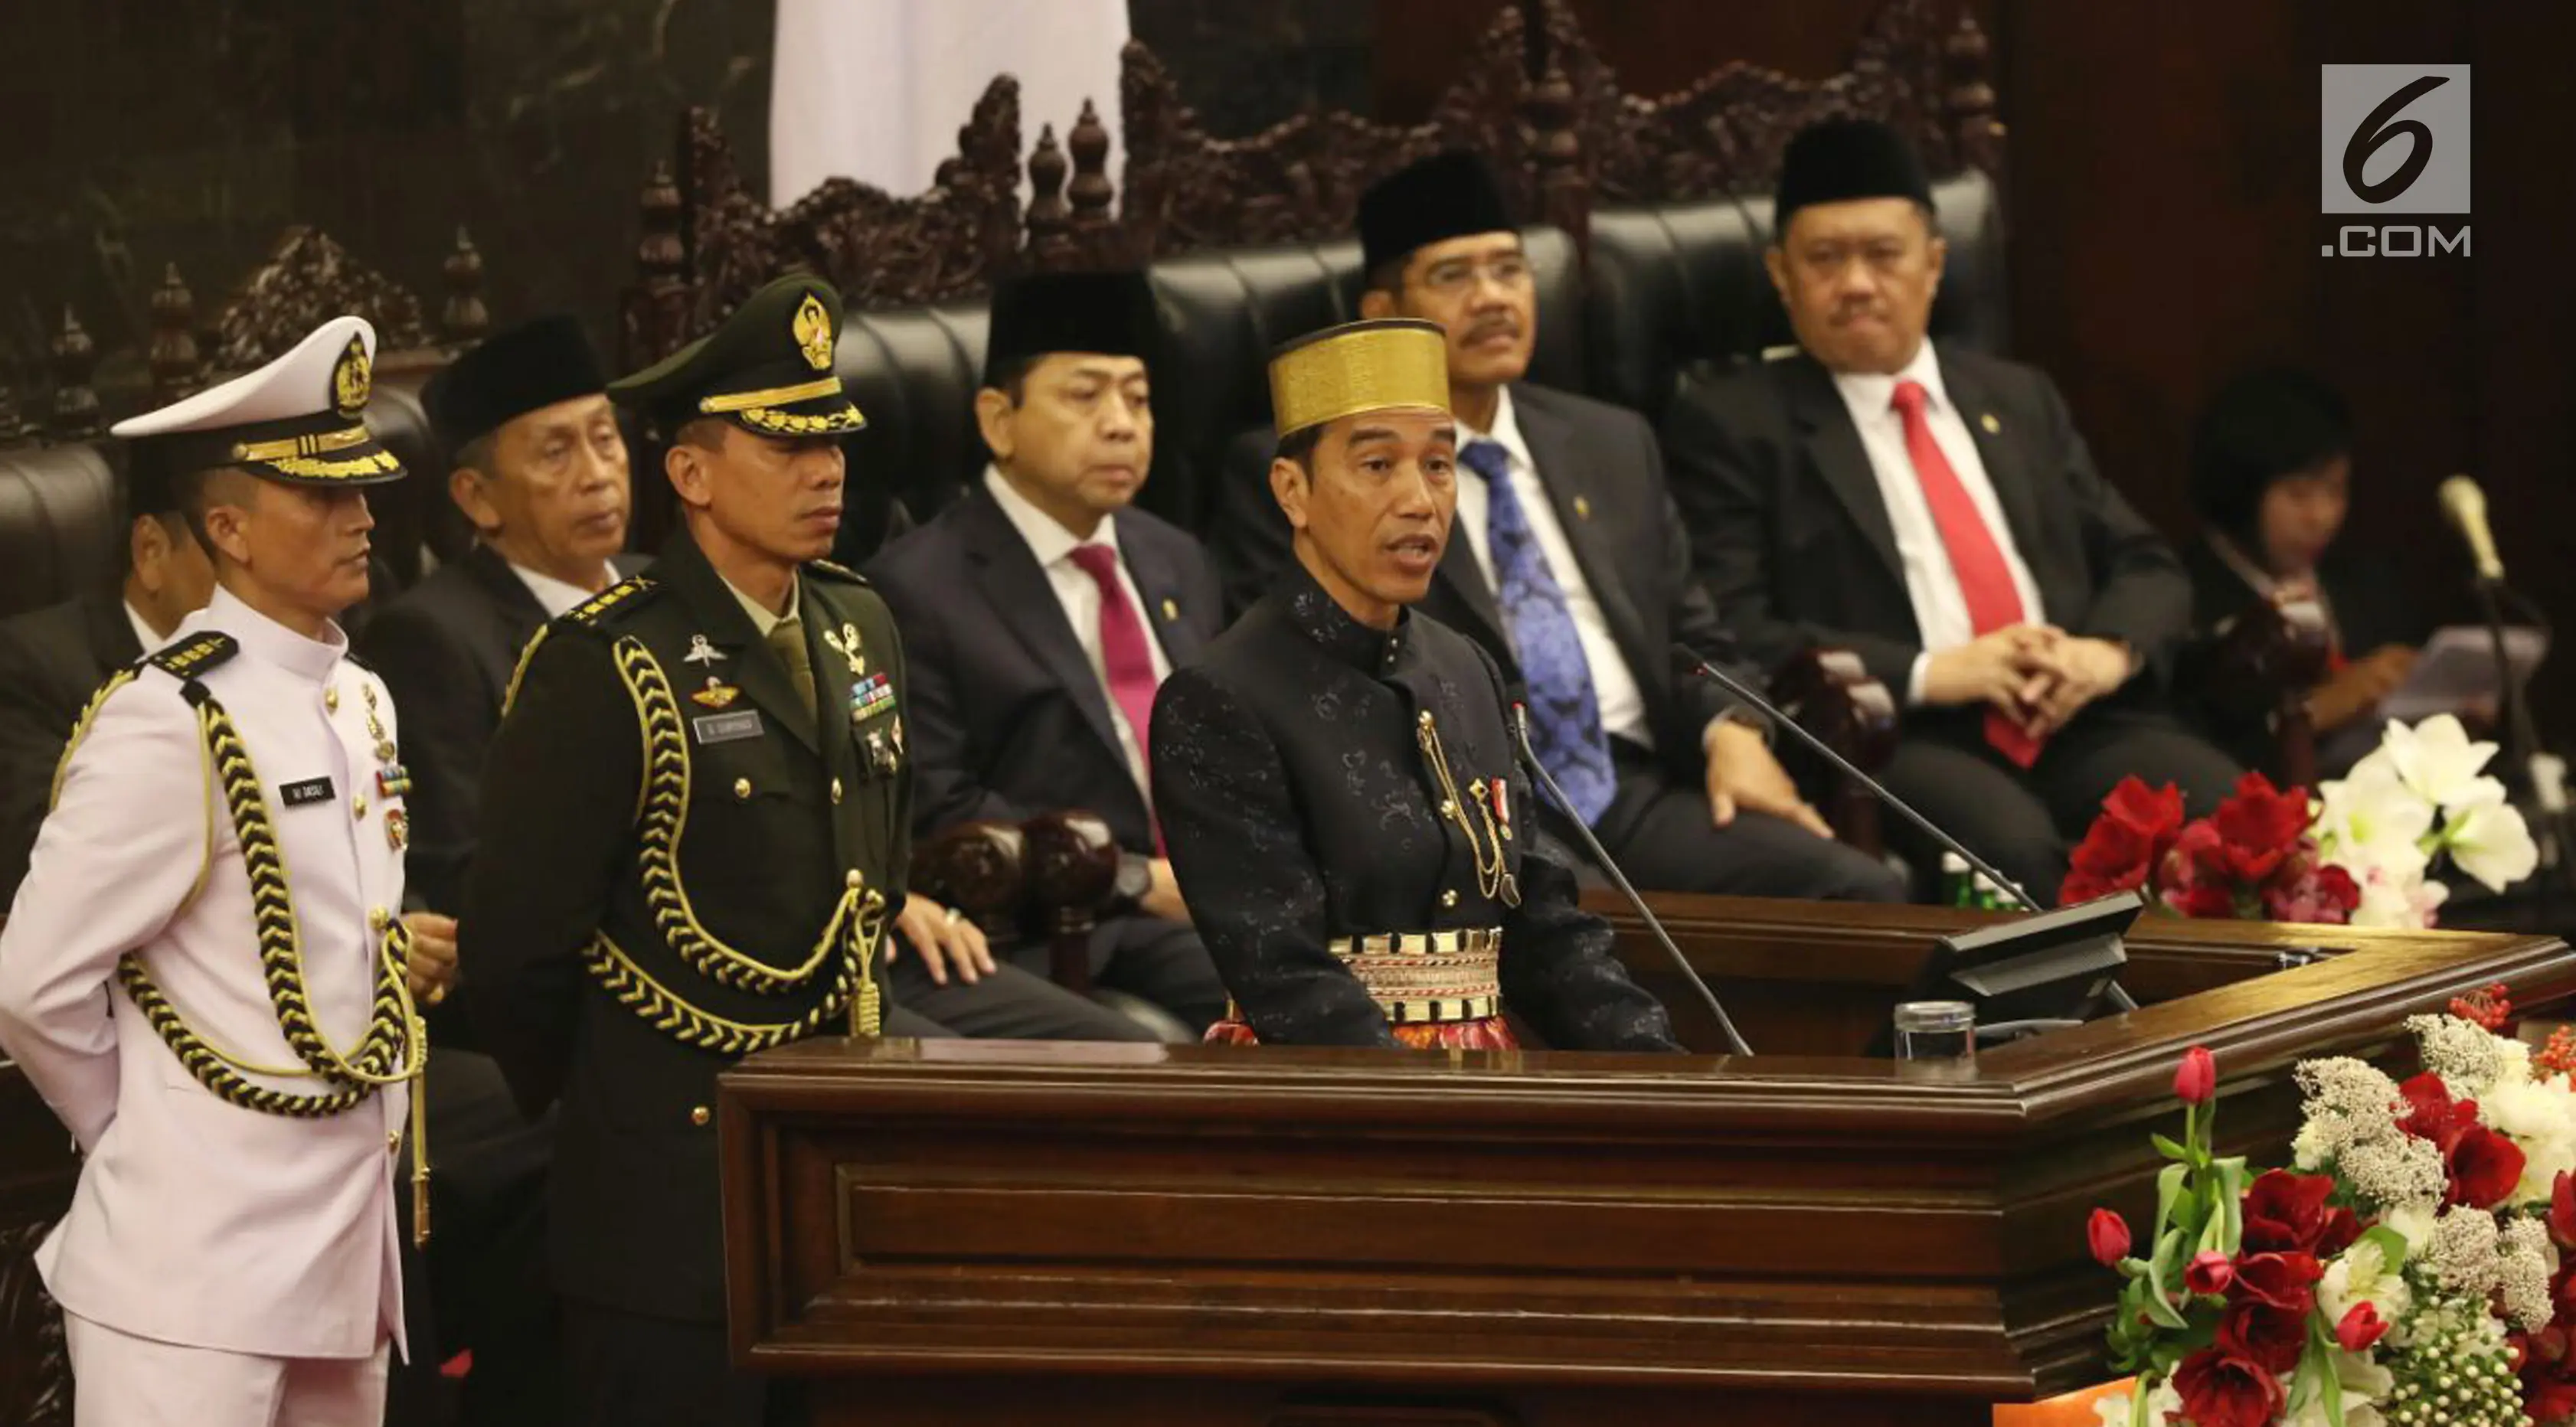 Presiden Joko Widodo atau Jokowi menyampaikan pidato dalam rangka Sidang Tahunan MPR di Kompleks Parlemen, Senayan, Jakarta, Selasa (16/8). Sidang tersebut beragendakan mendengar pidato Presiden Jokowi selaku Kepala Negara. (Liputan6.com/Johan Tallo)